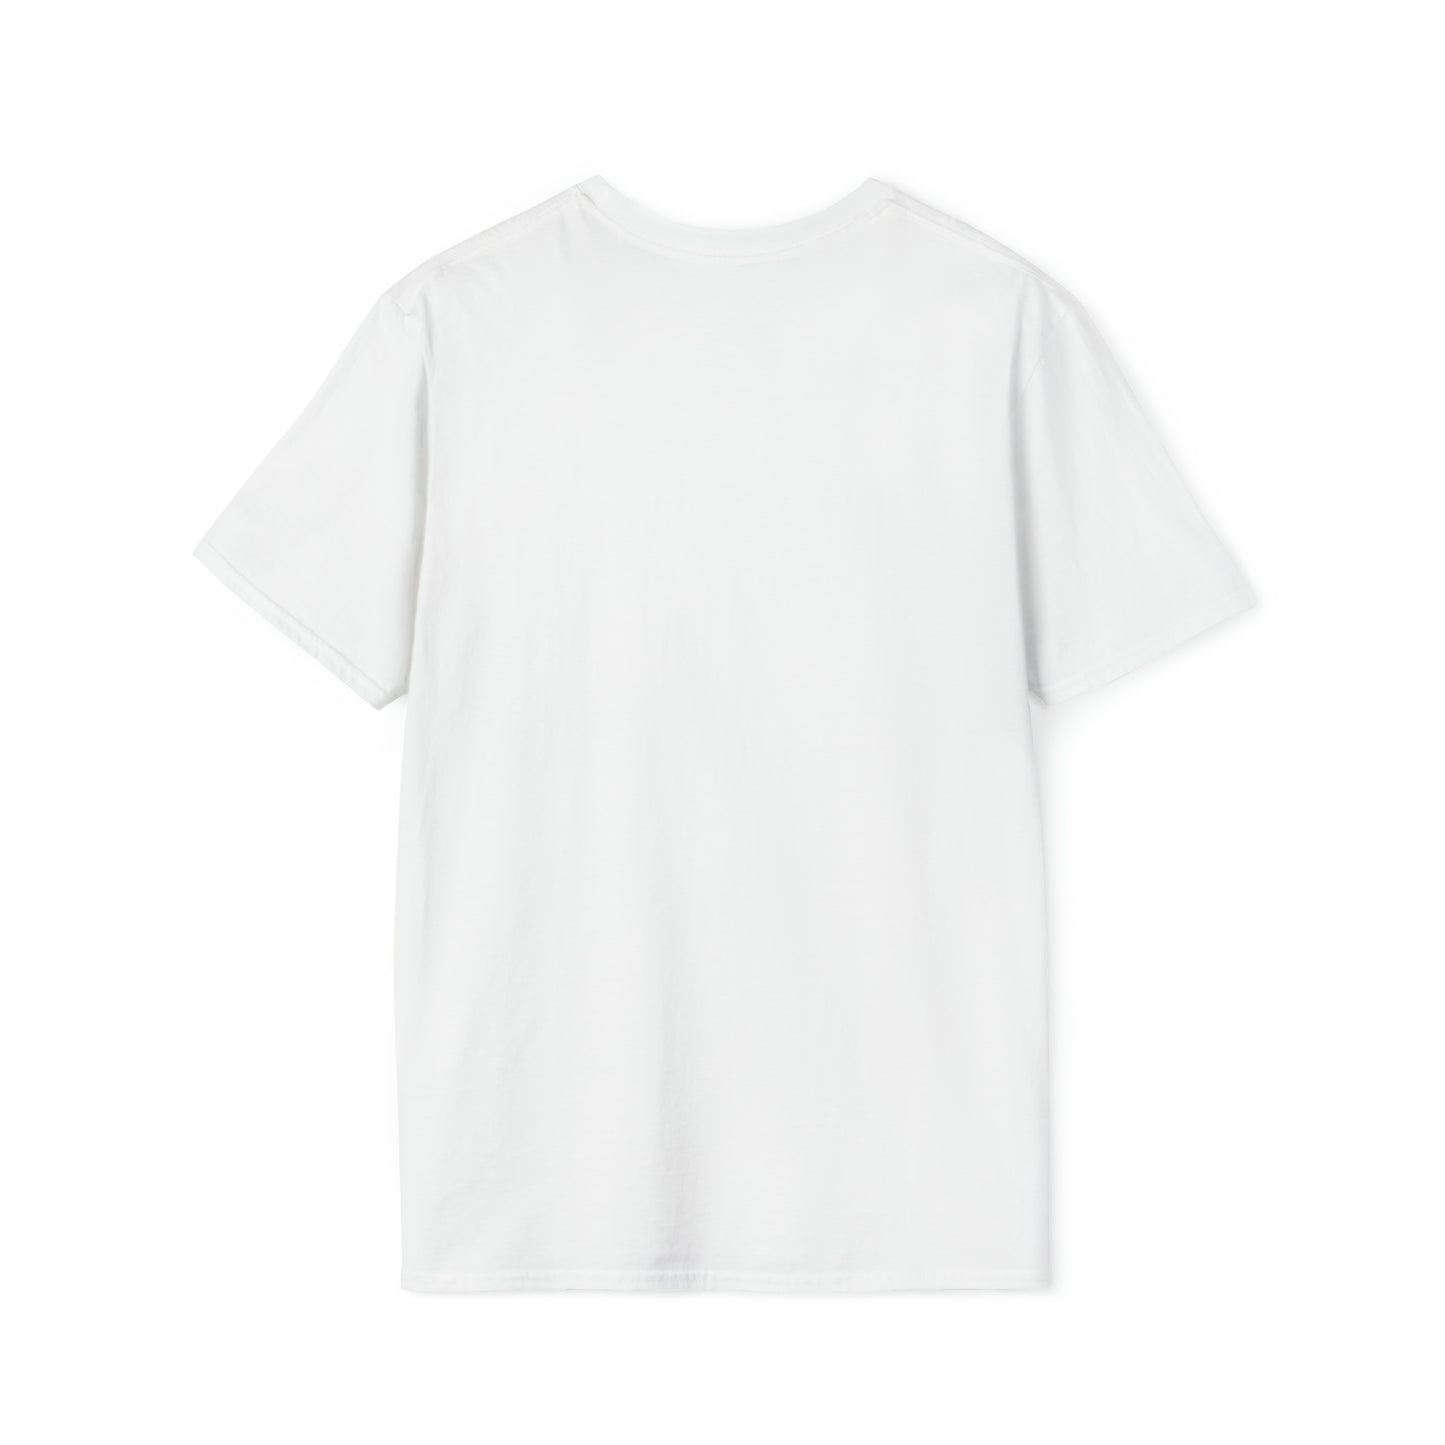 TYFU Unisex T-Shirt 2